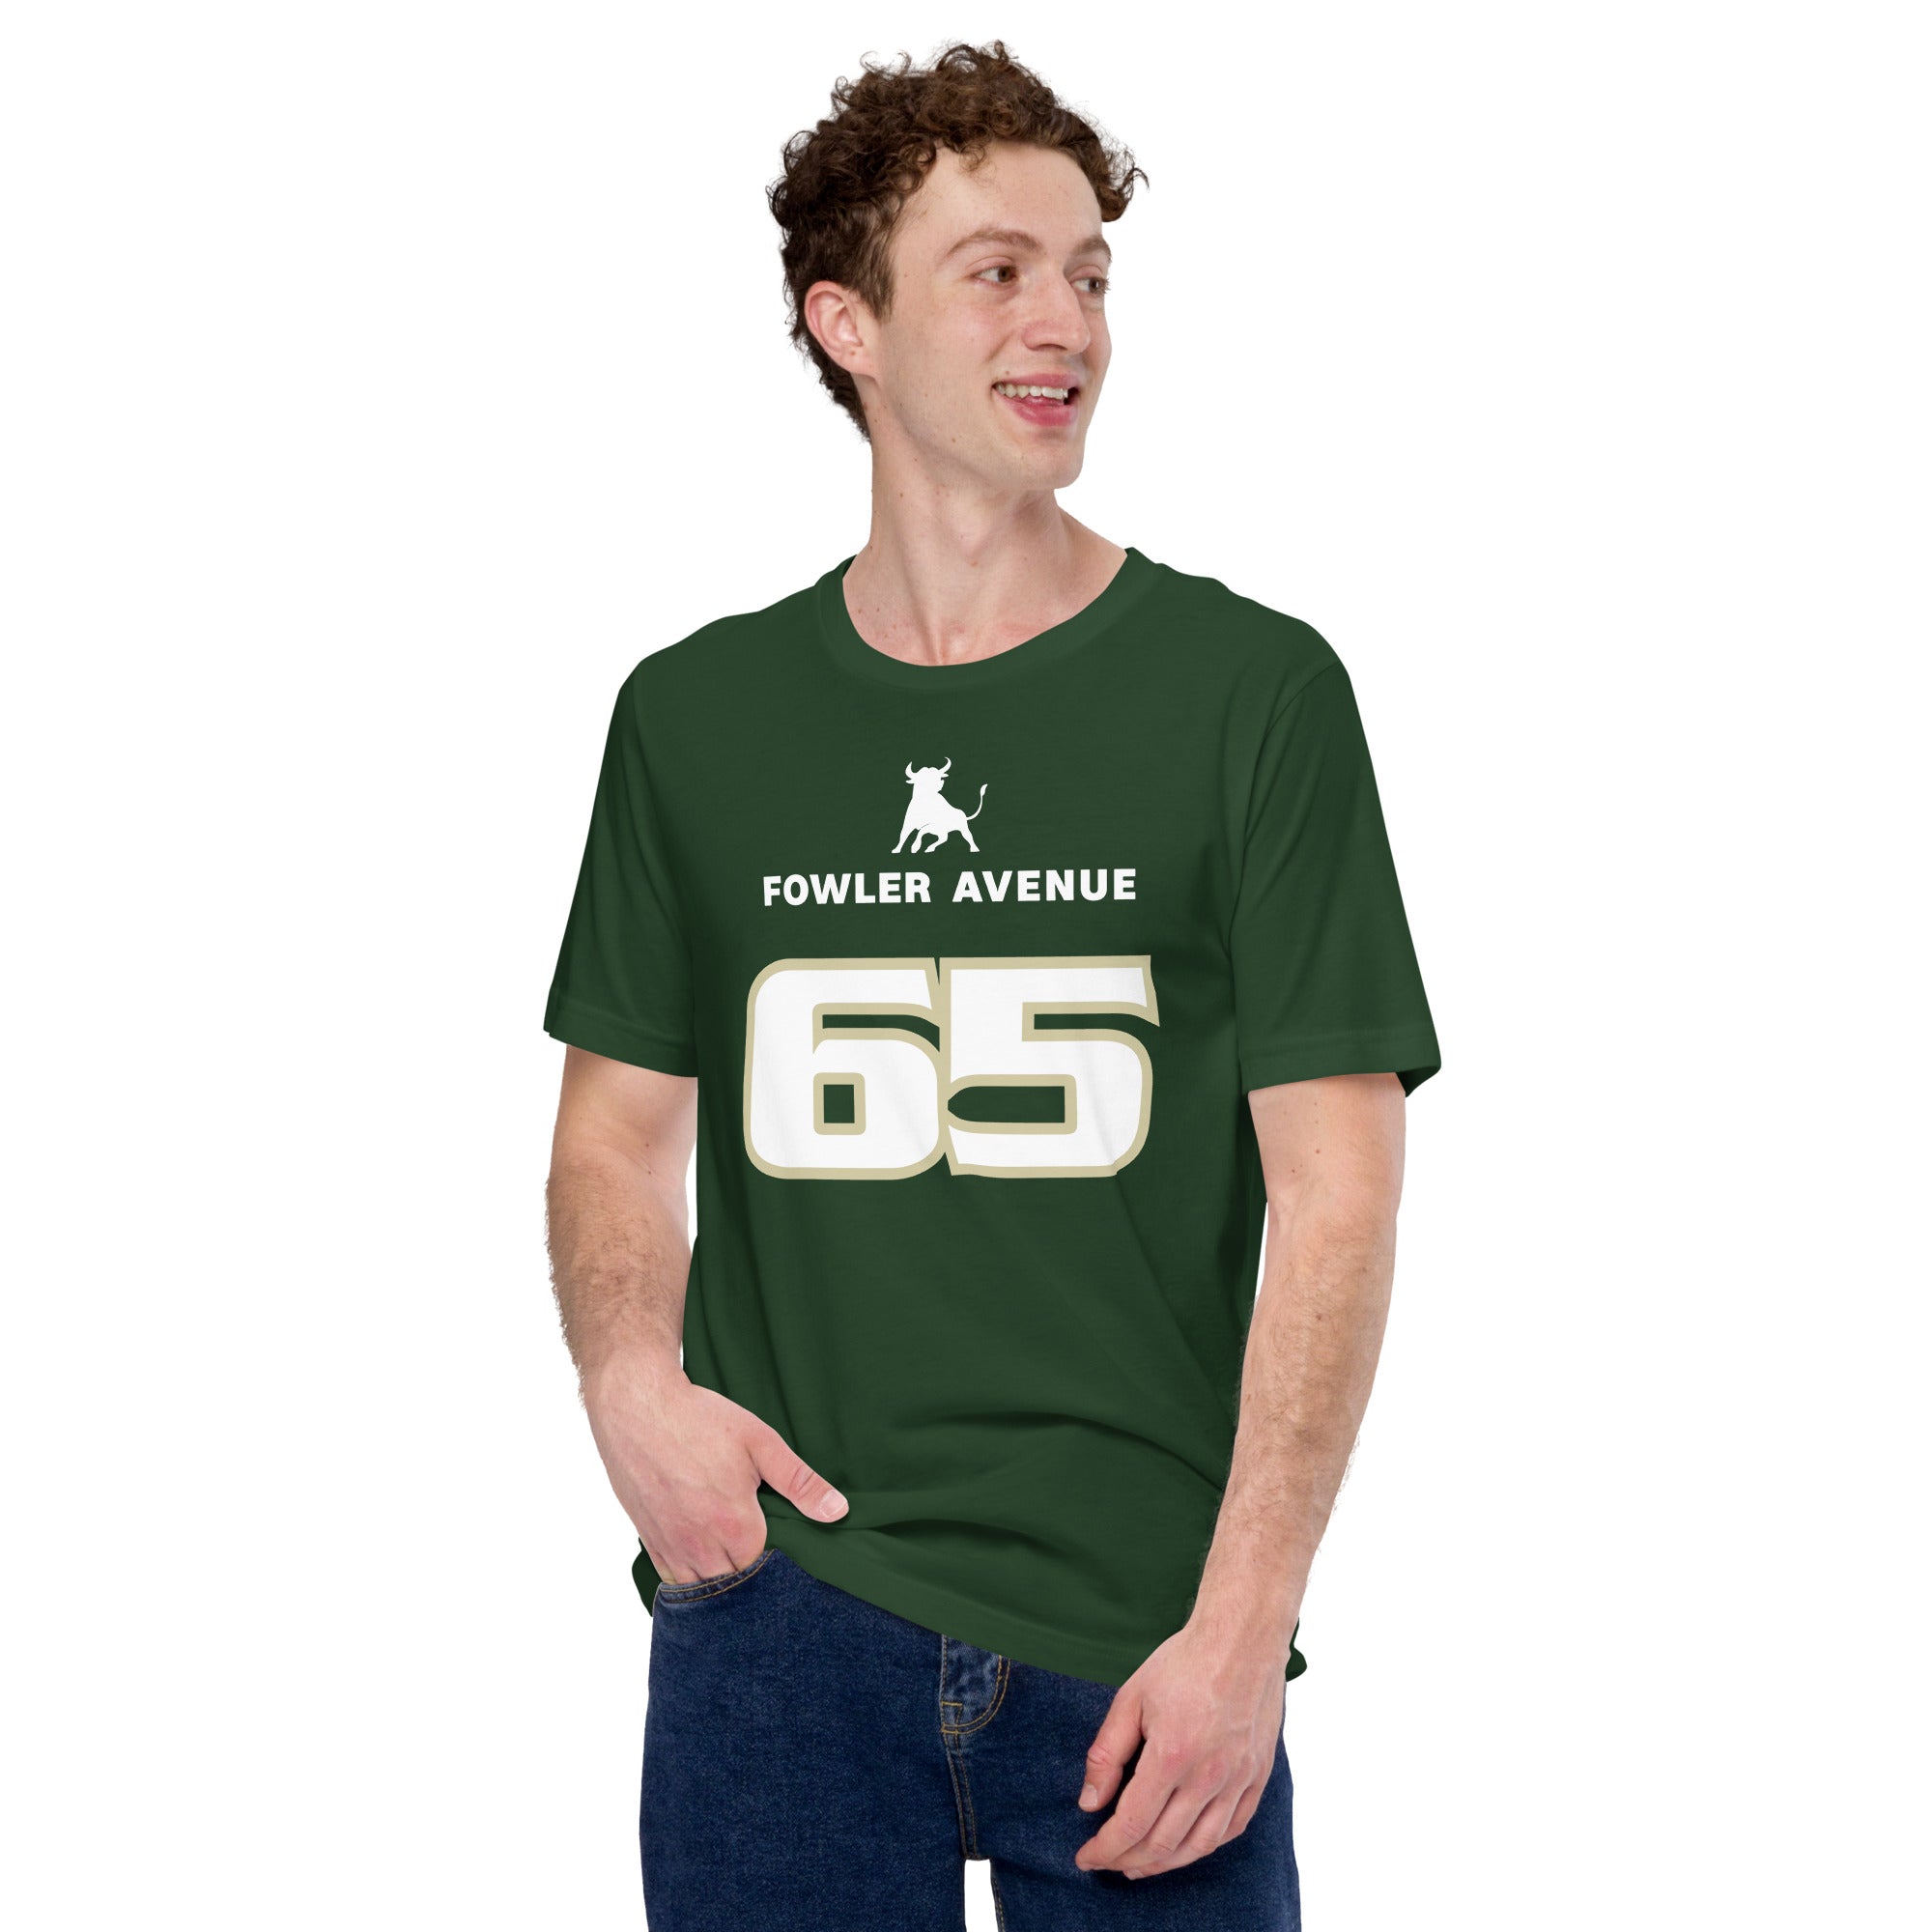 #65 Mike Lofton - Jersey Shirt